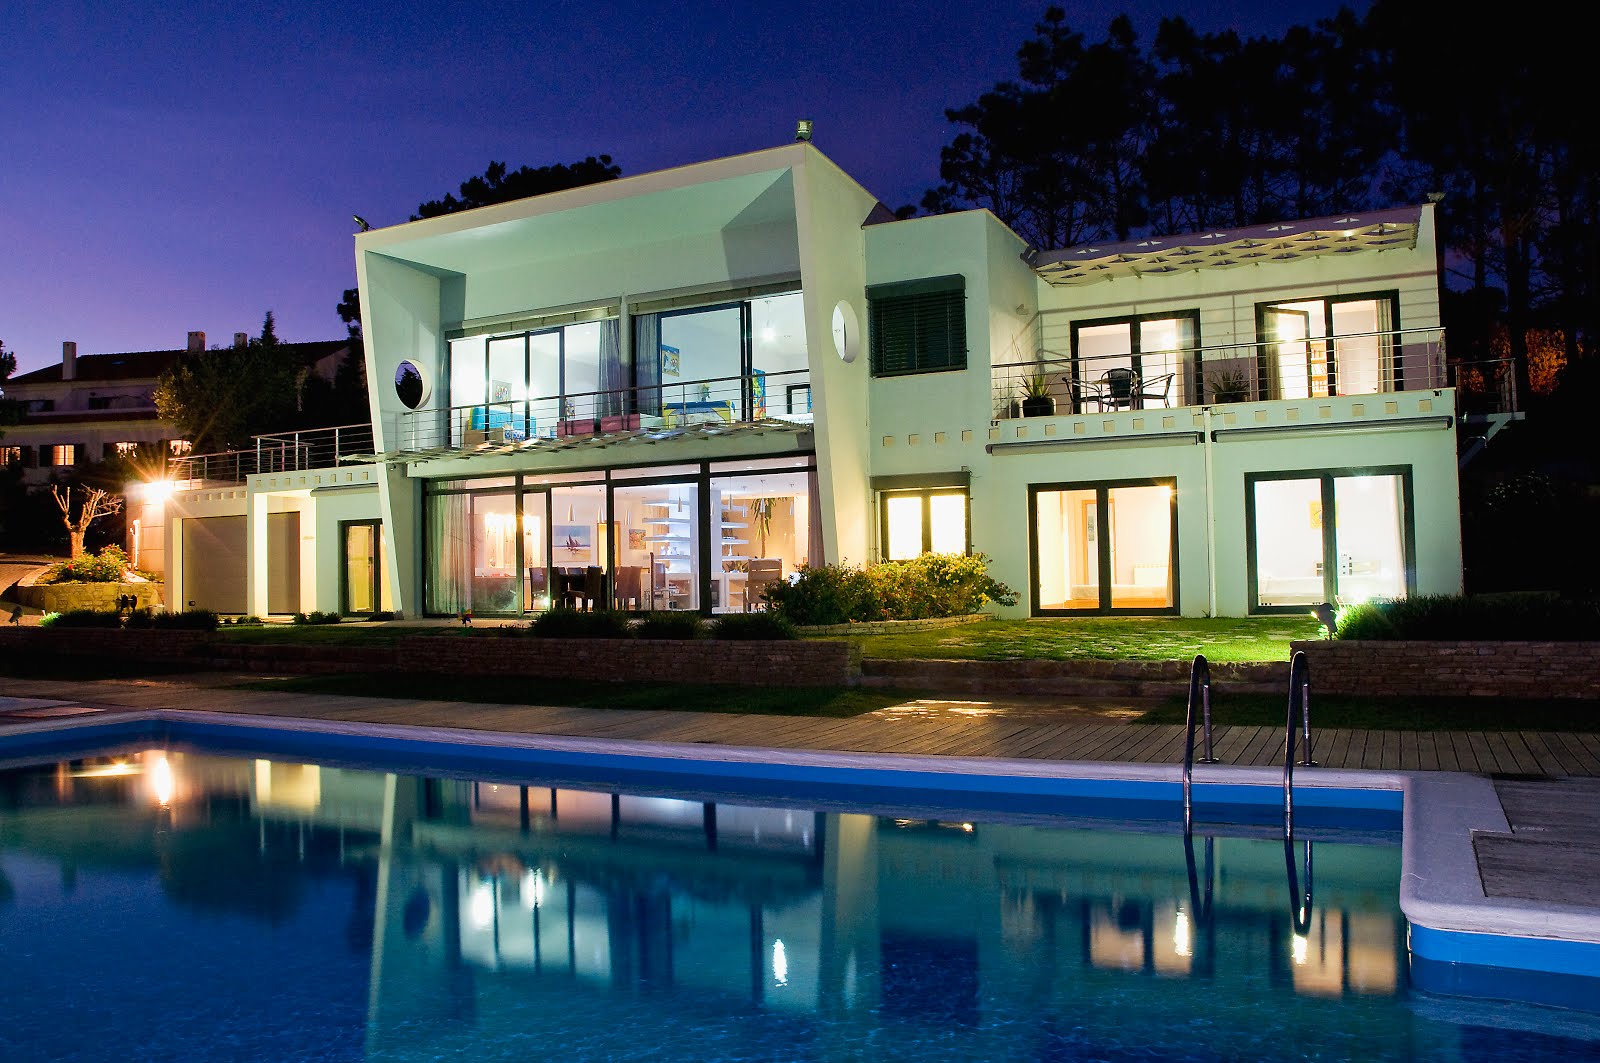 Visit the fantastic Villa for holiday rentals